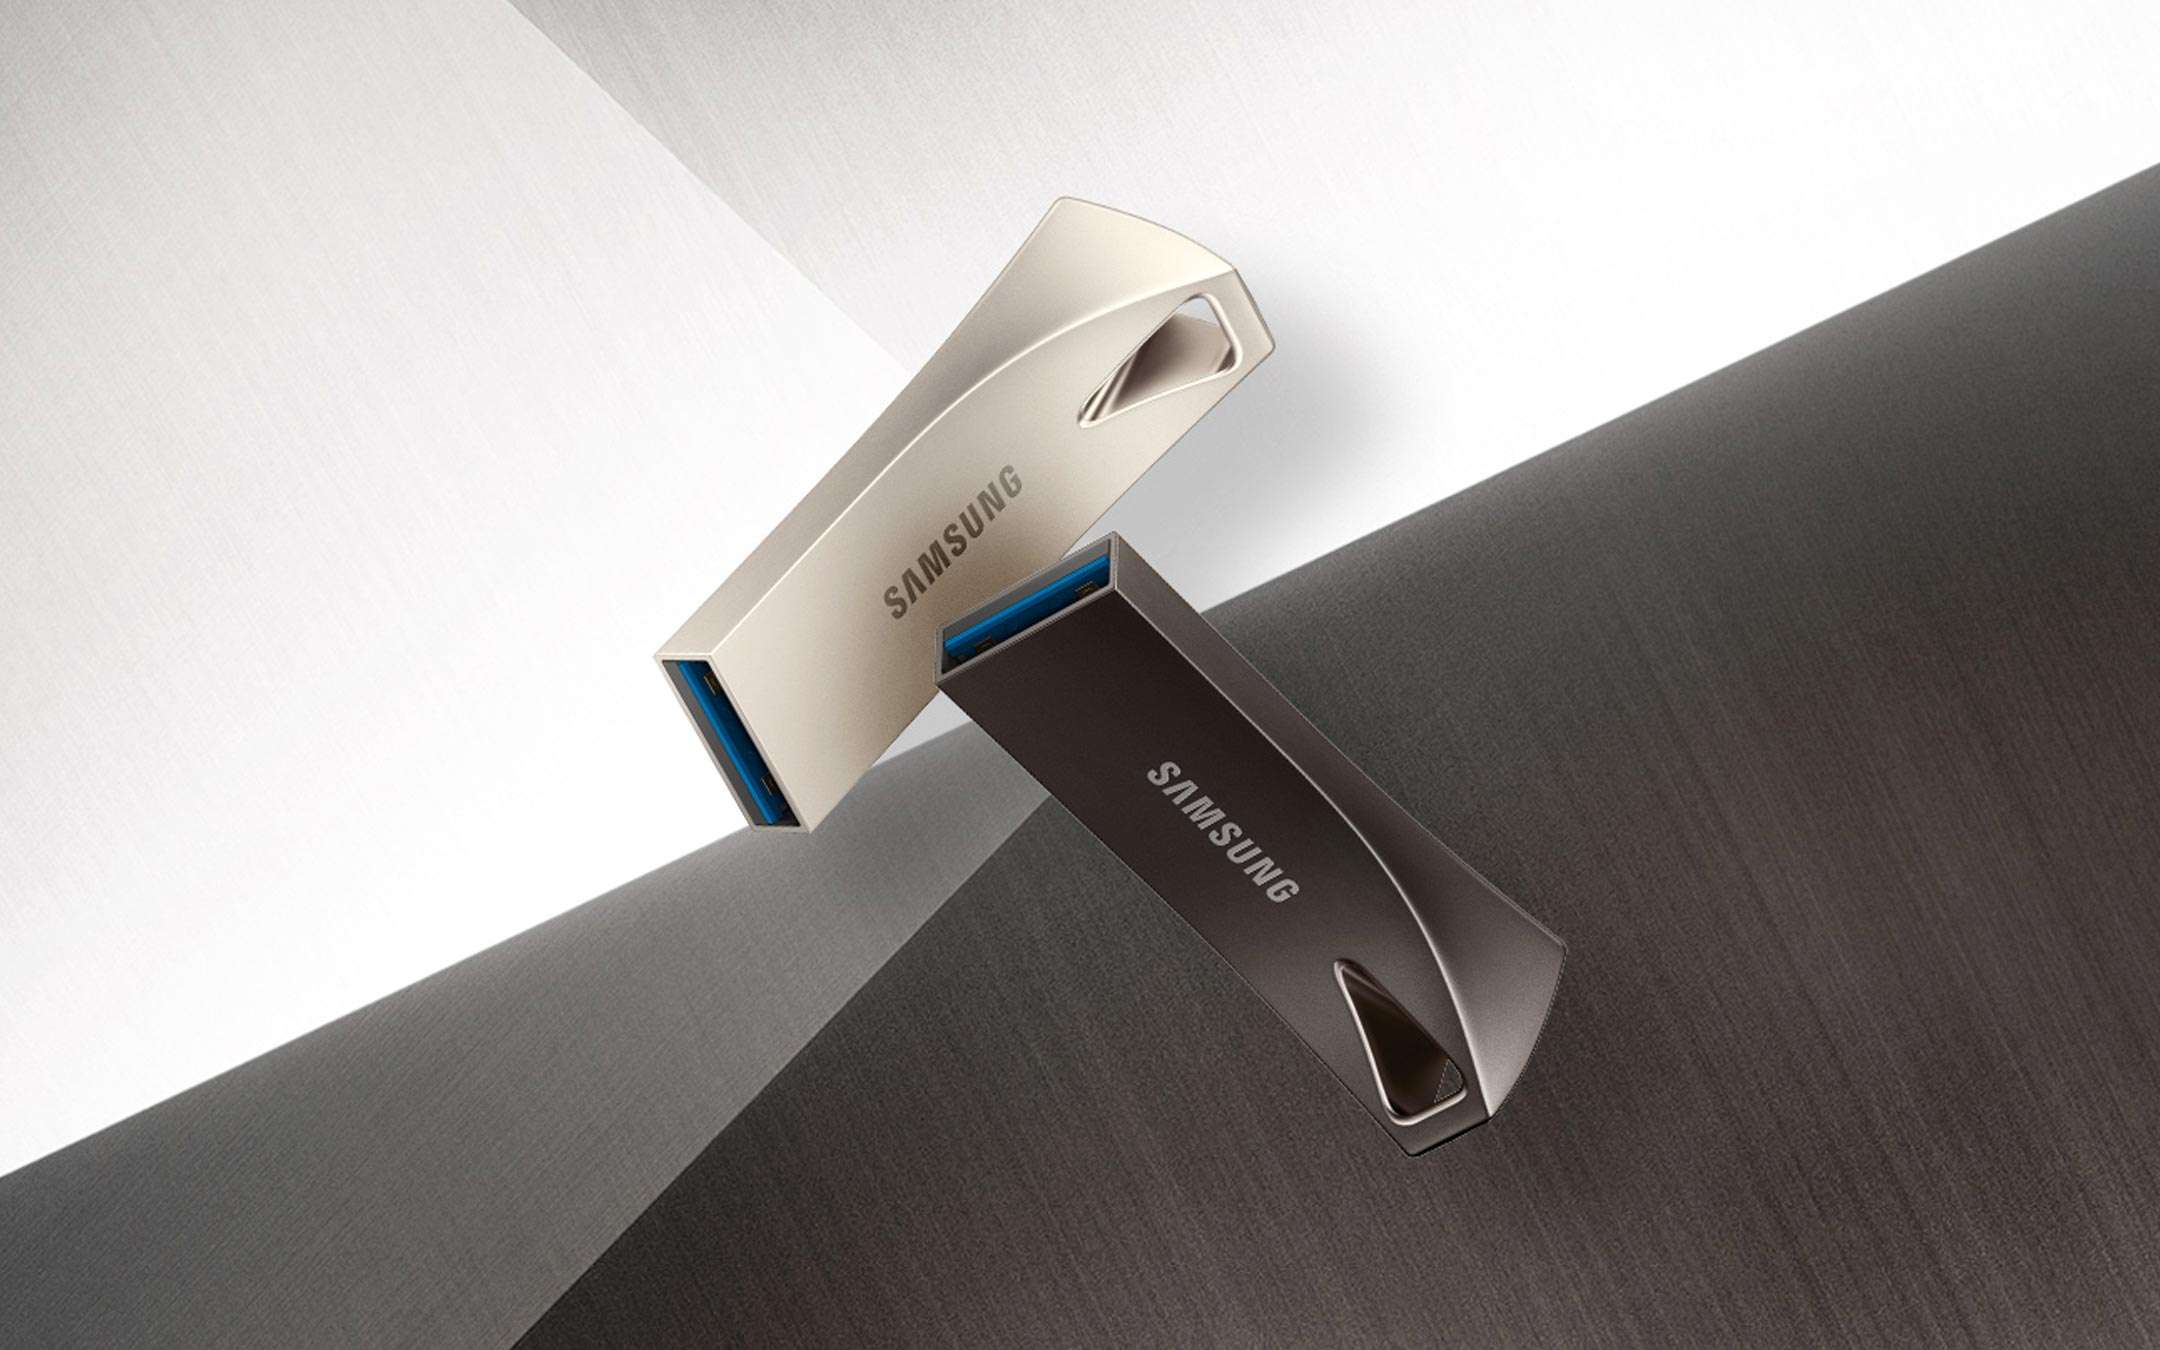 Samsung Bar Plus: USB Flash Drive on offer at -34%